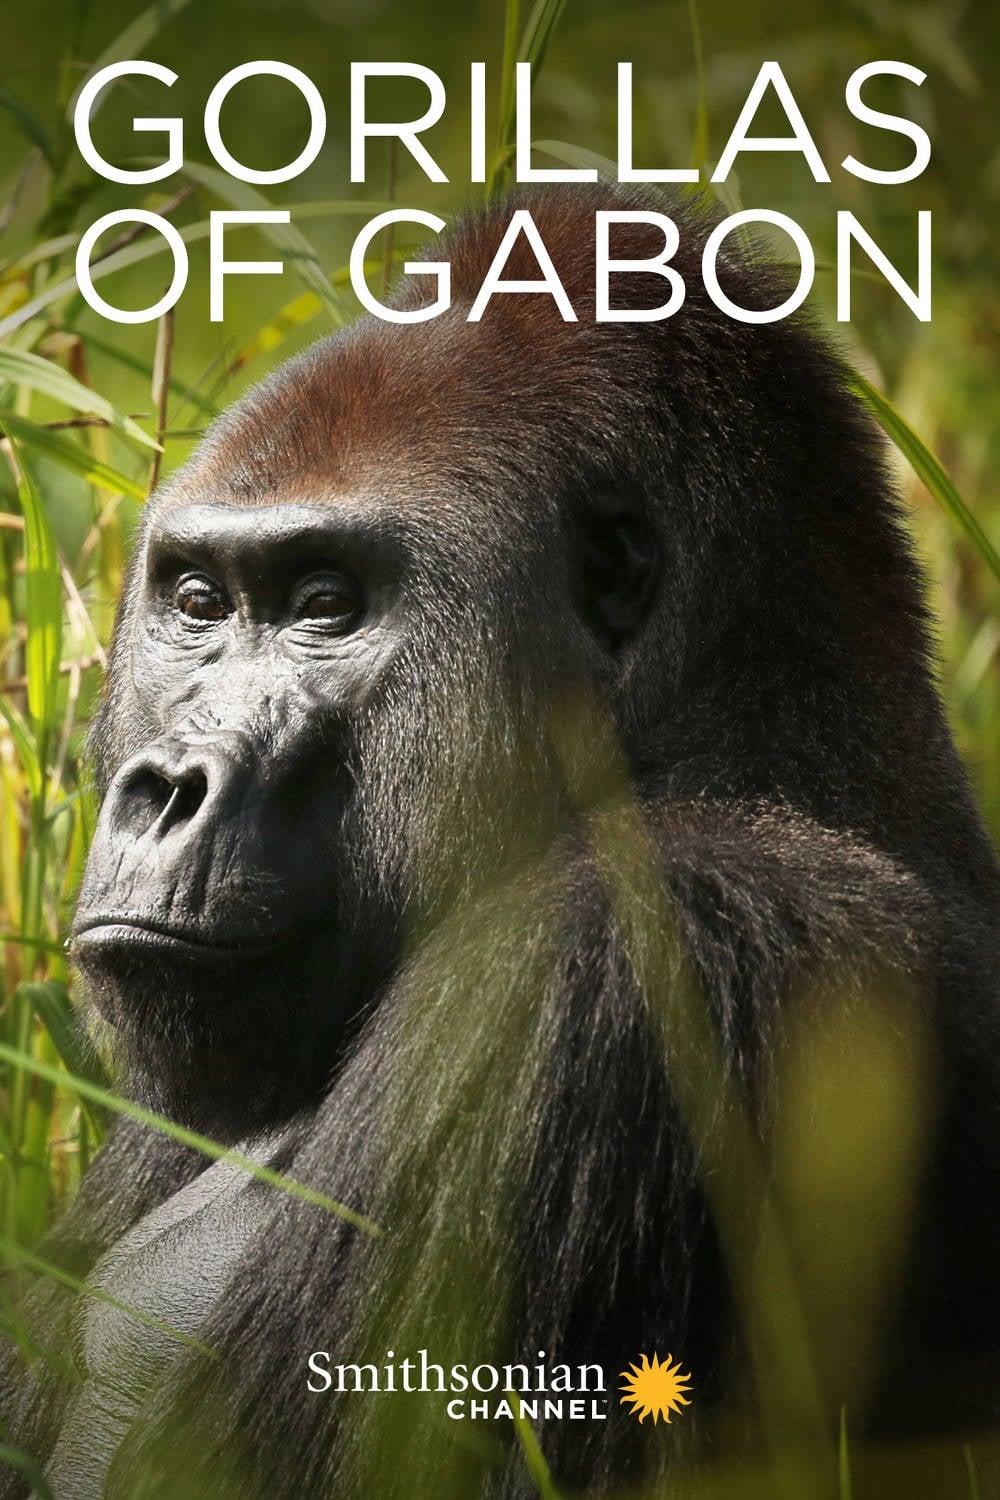 Gorillas of Gabon poster